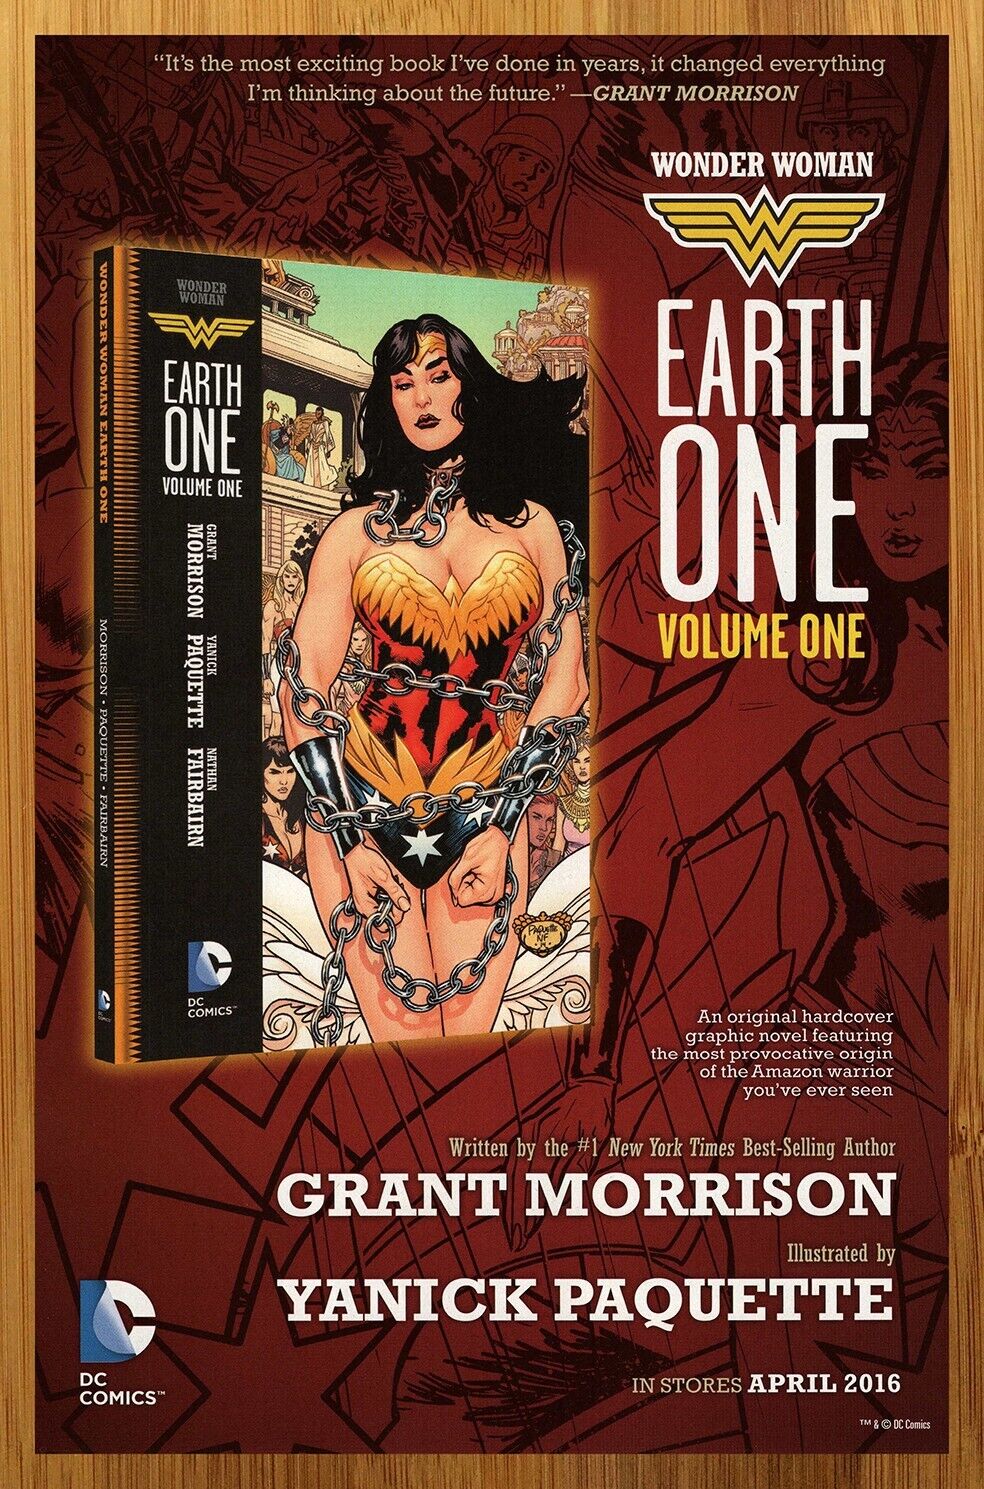 2016 Wonder Woman Earth One Print Ad/Poster Grant Morrison Yanick Paquette Art